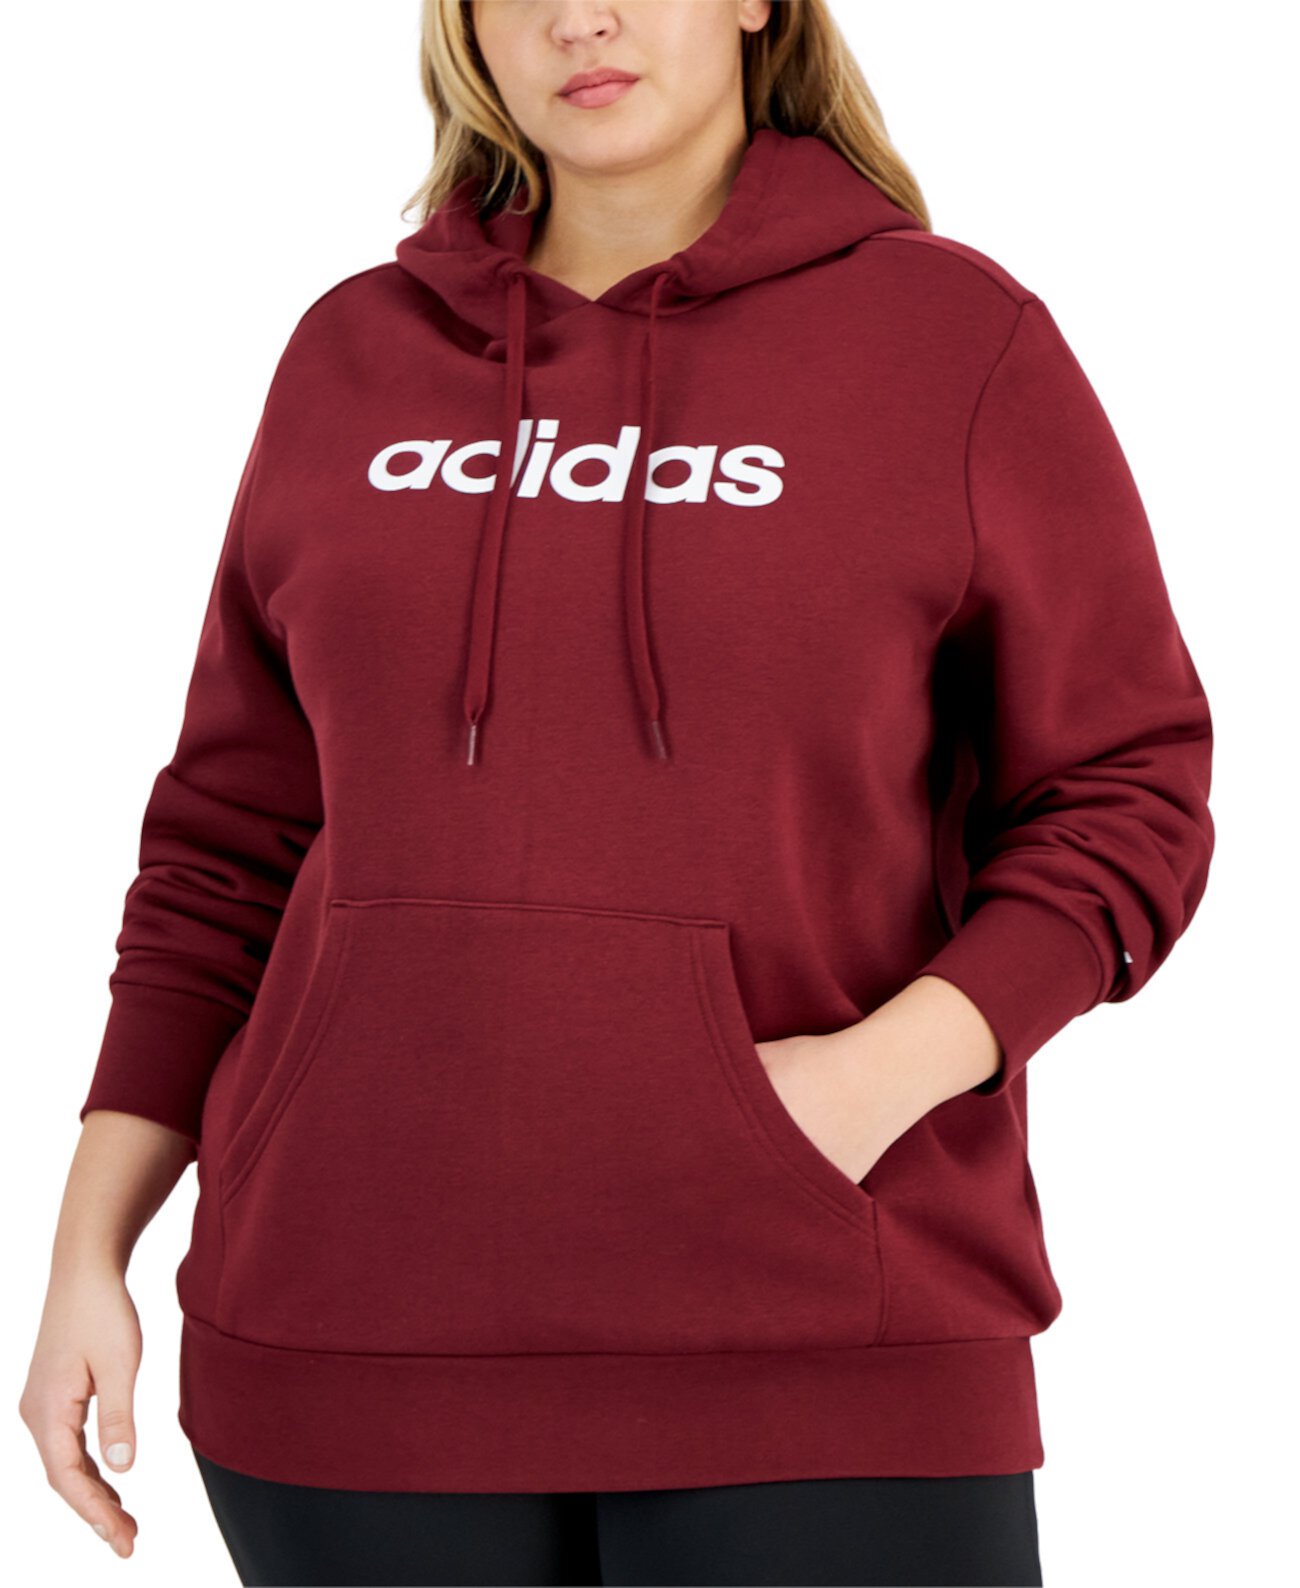 Женский свитер с капюшоном Adidas Adidas